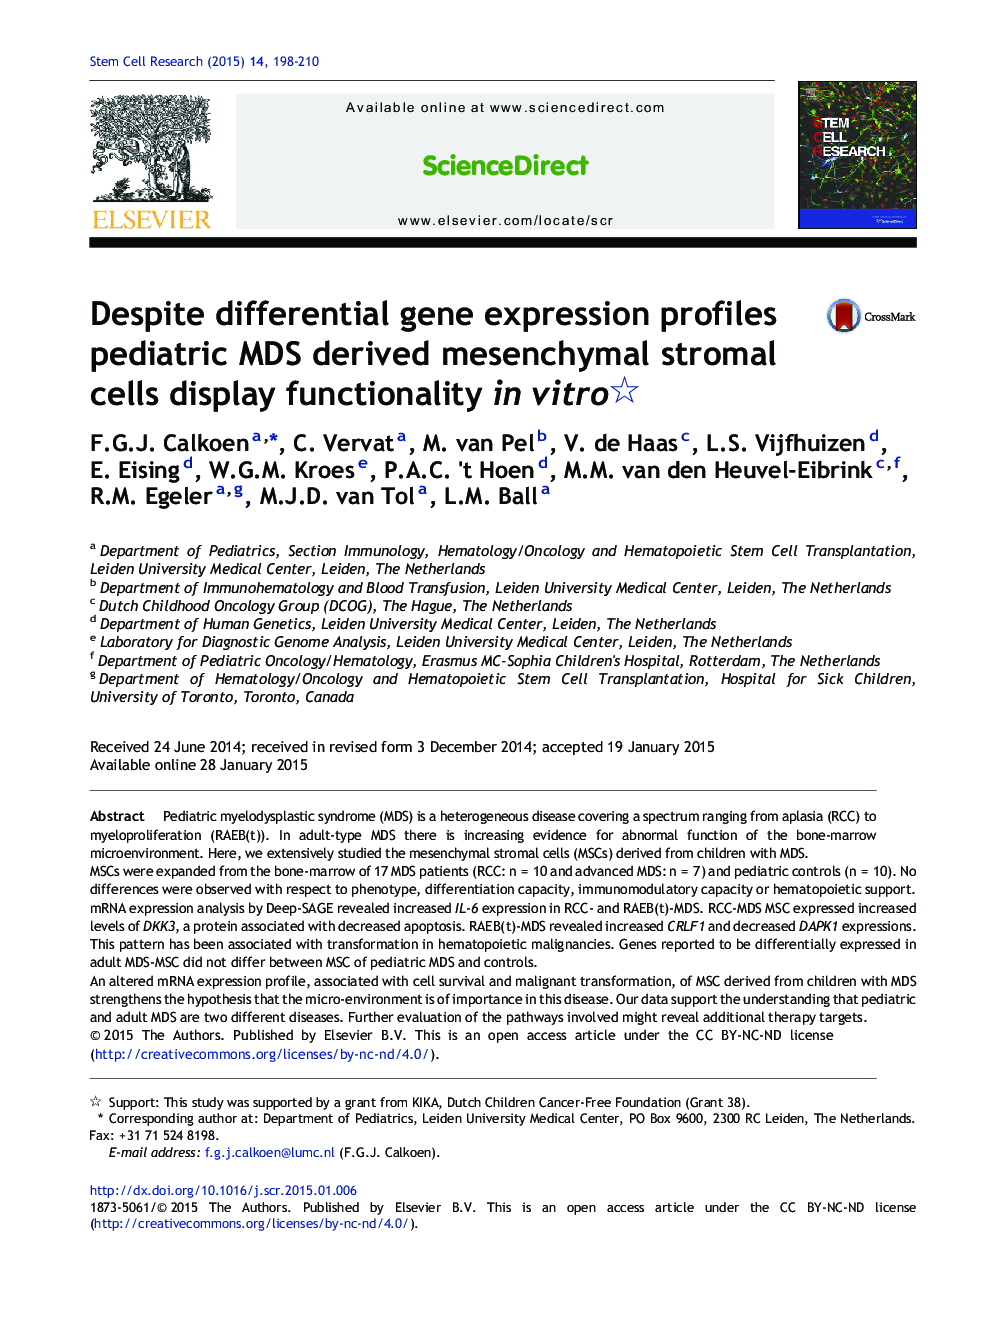 Despite differential gene expression profiles pediatric MDS derived mesenchymal stromal cells display functionality in vitro 